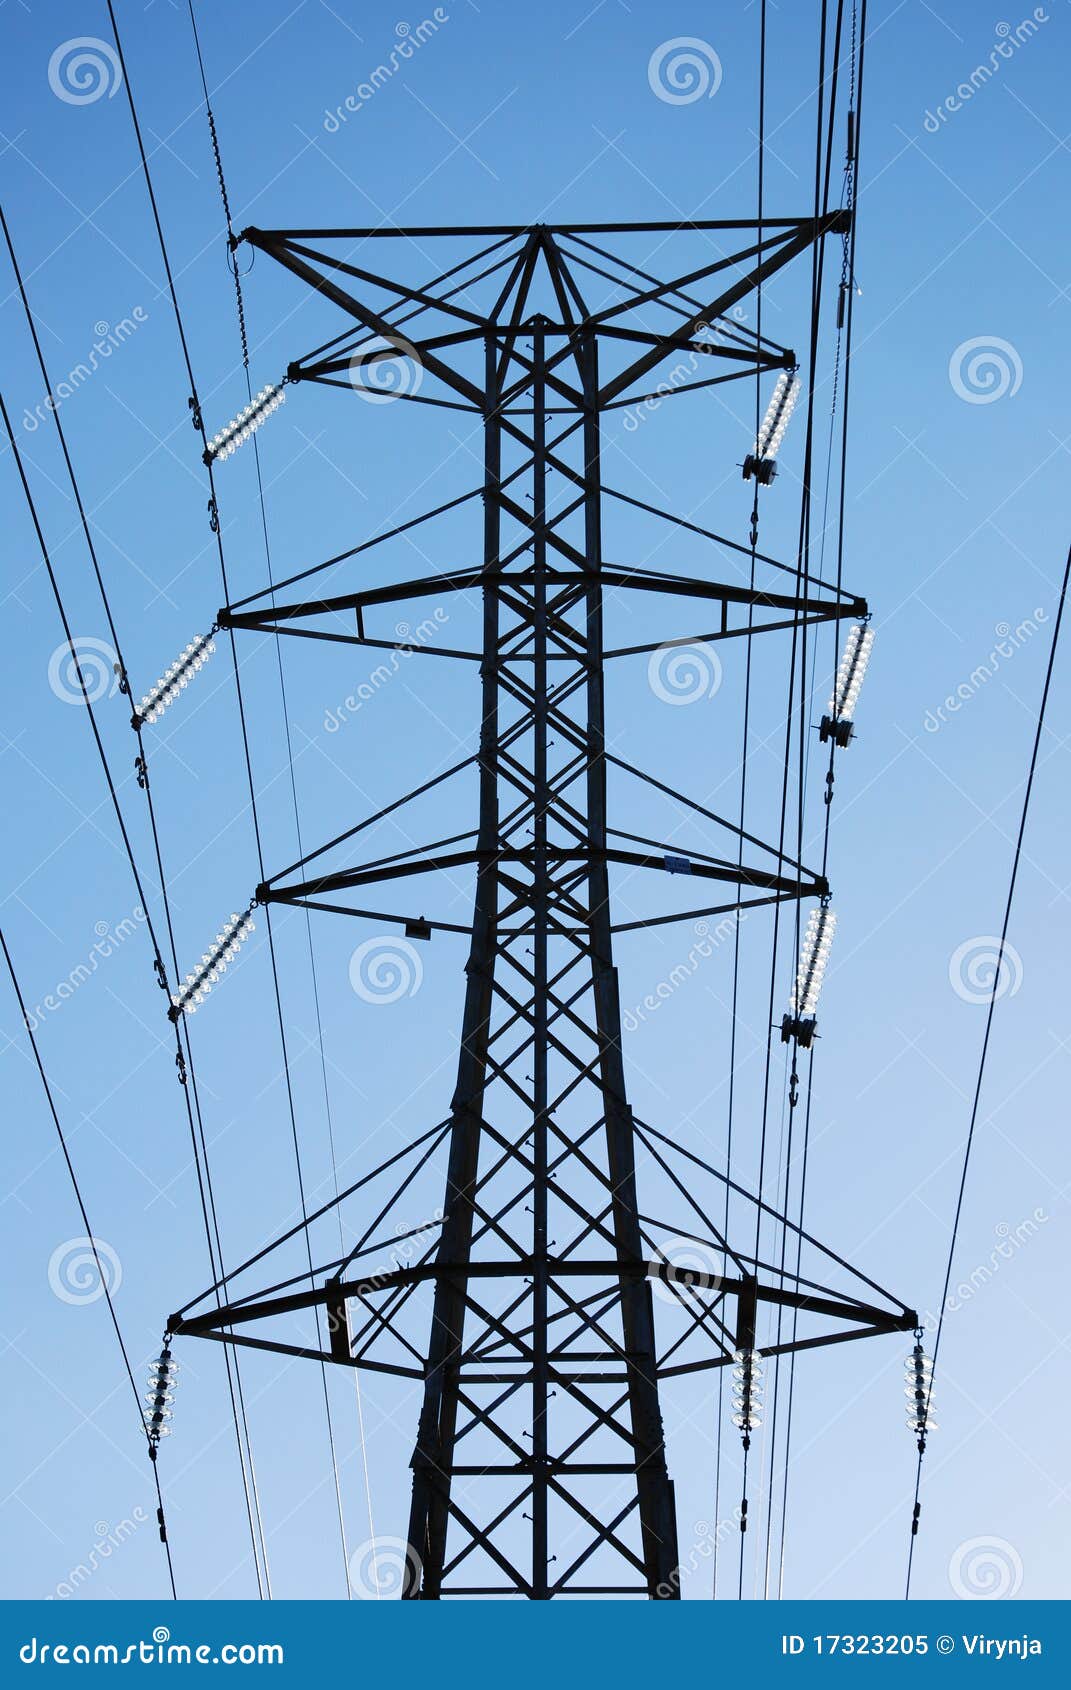 power grid clipart - photo #34